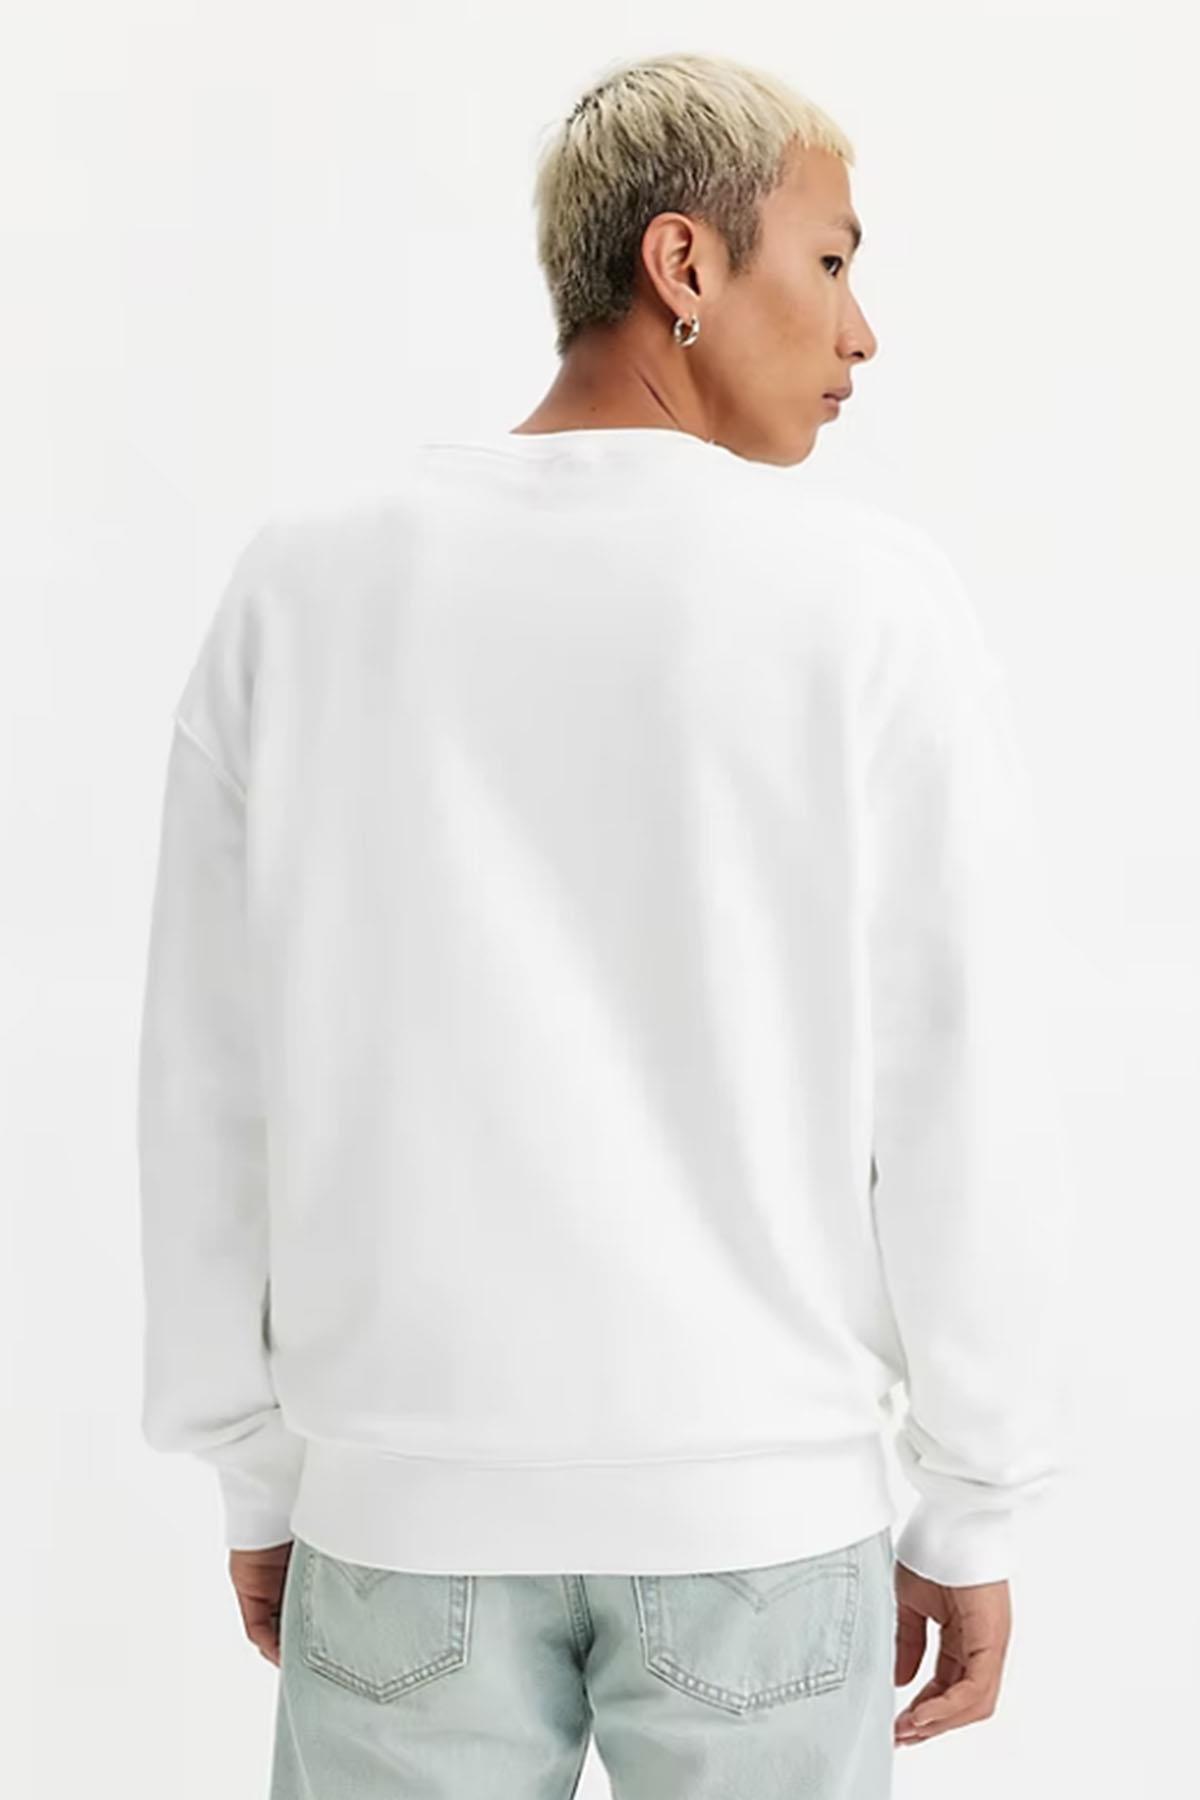 Levi's Erkek Beyaz Sweatshirt - 38712-0159